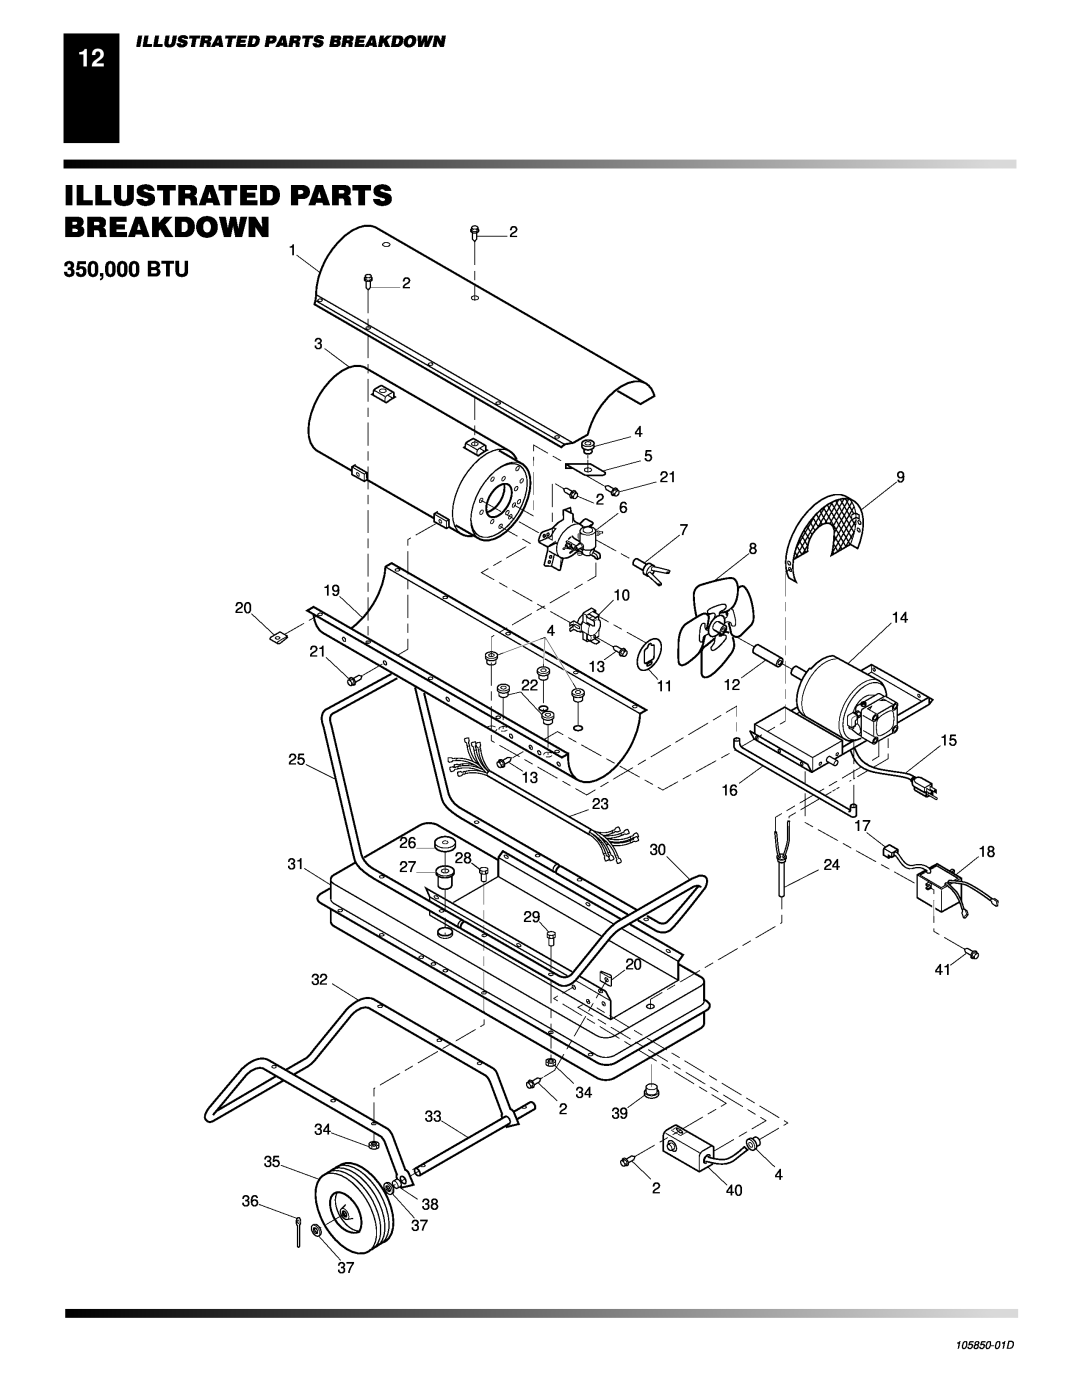 Desa CP600AK, CP350AK owner manual Illustrated Parts Breakdown, 350,000 BTU 